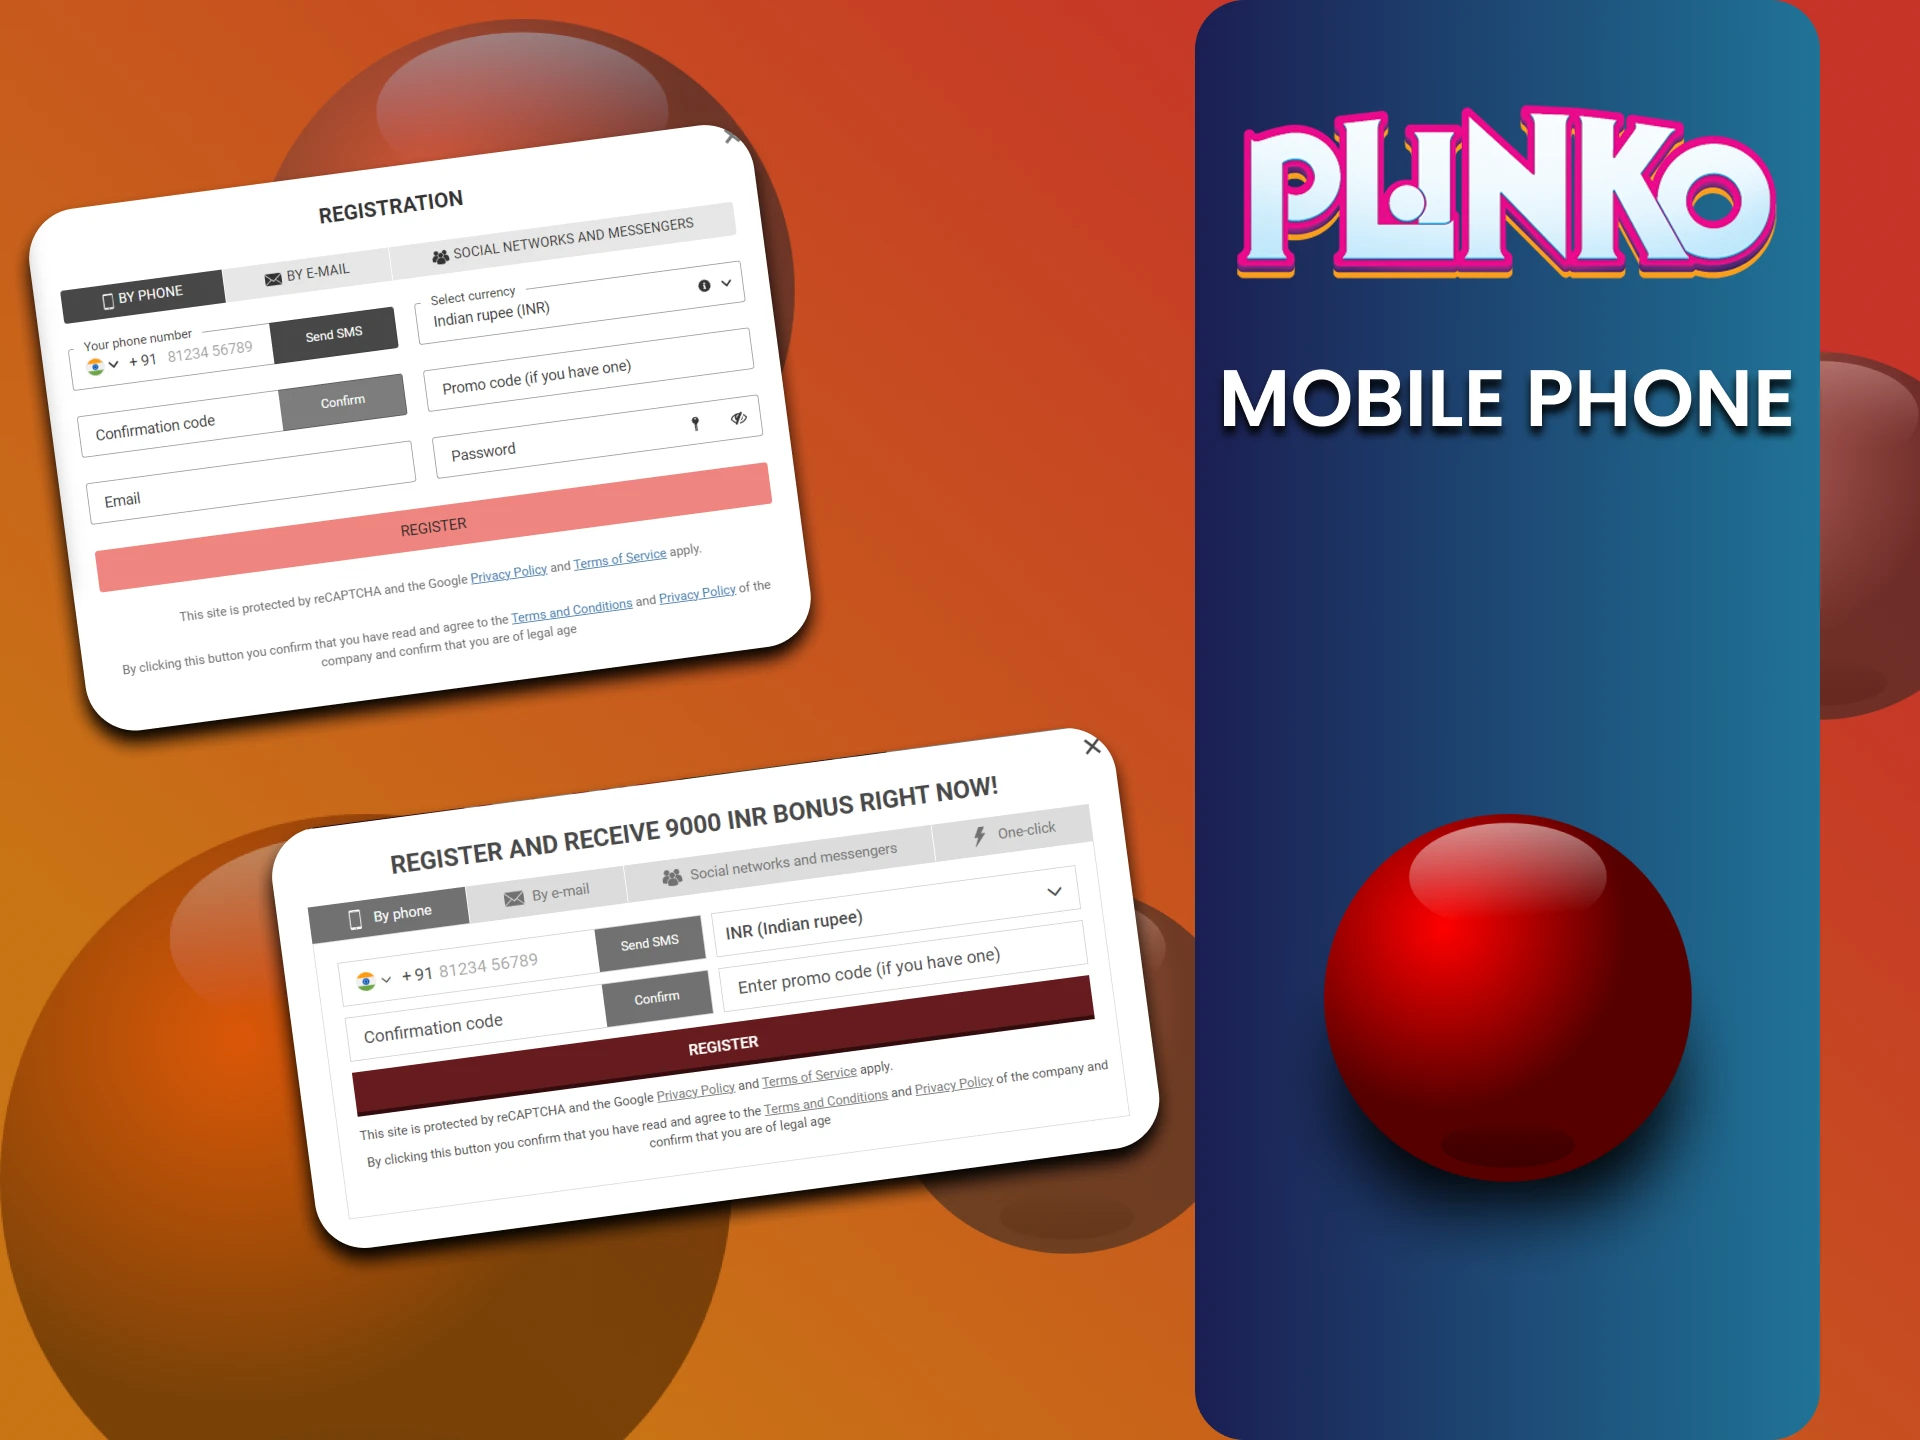 To play Plinko, select the registration method via Mobile Phone.